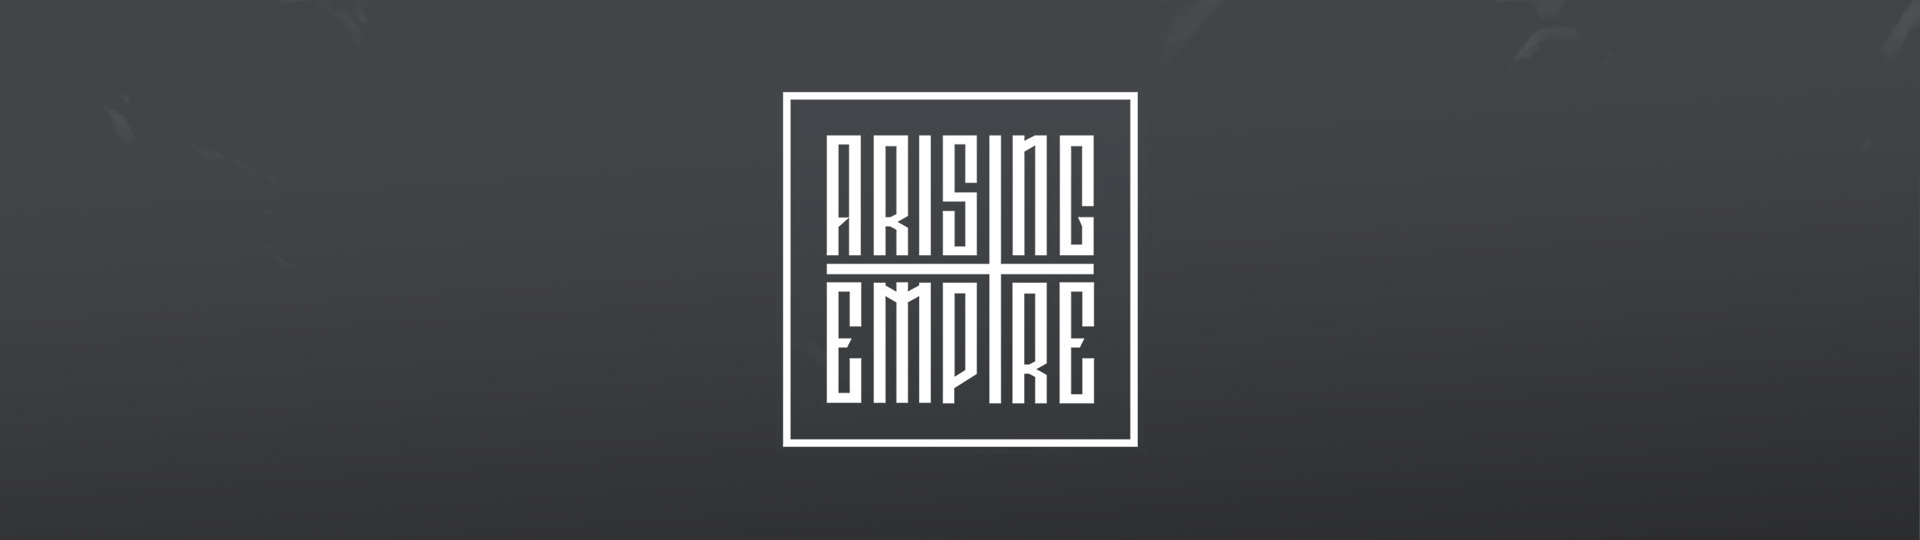 Arising Empire at OUT OF VOGUE SHOP / DE